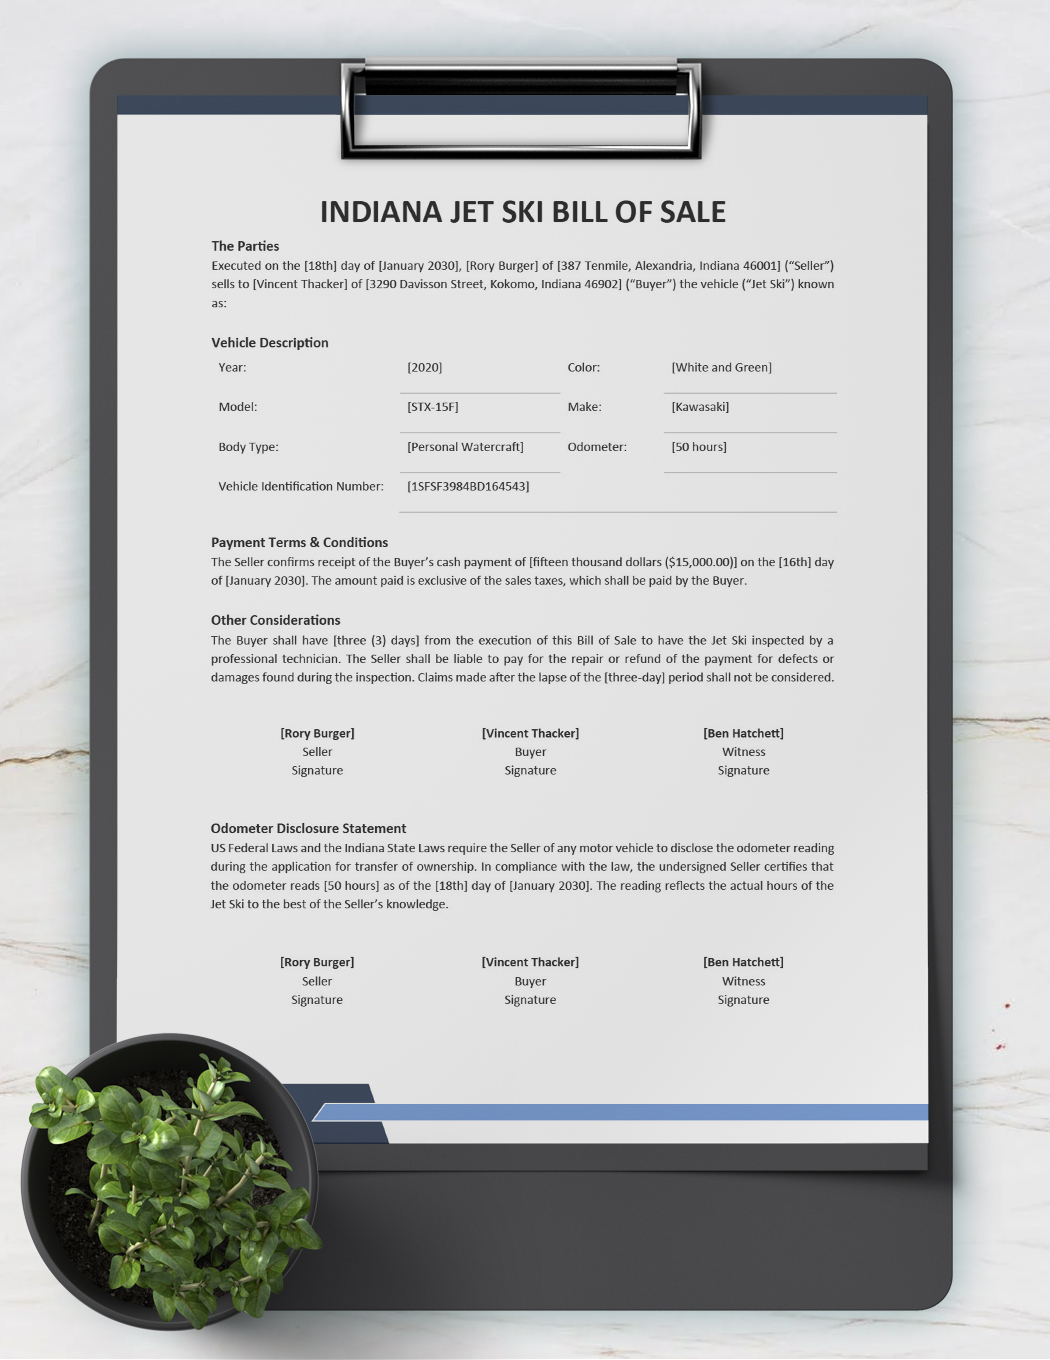 Indiana Jet Ski Bill of Sale Template